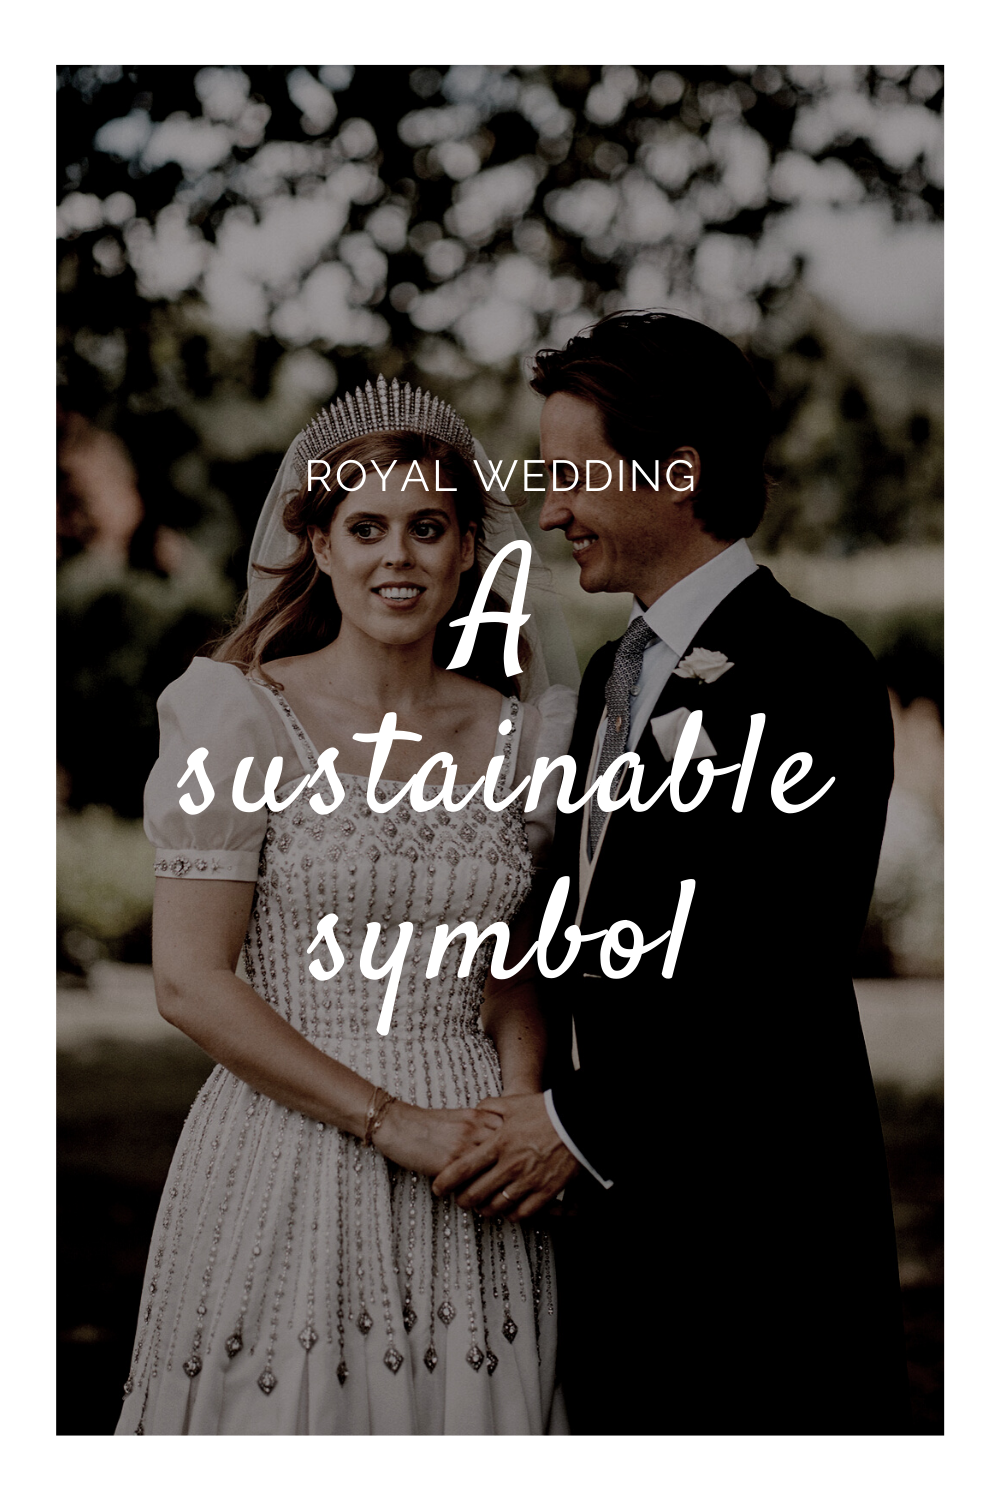 Princess Beatrice wedding: a sustainable symbol